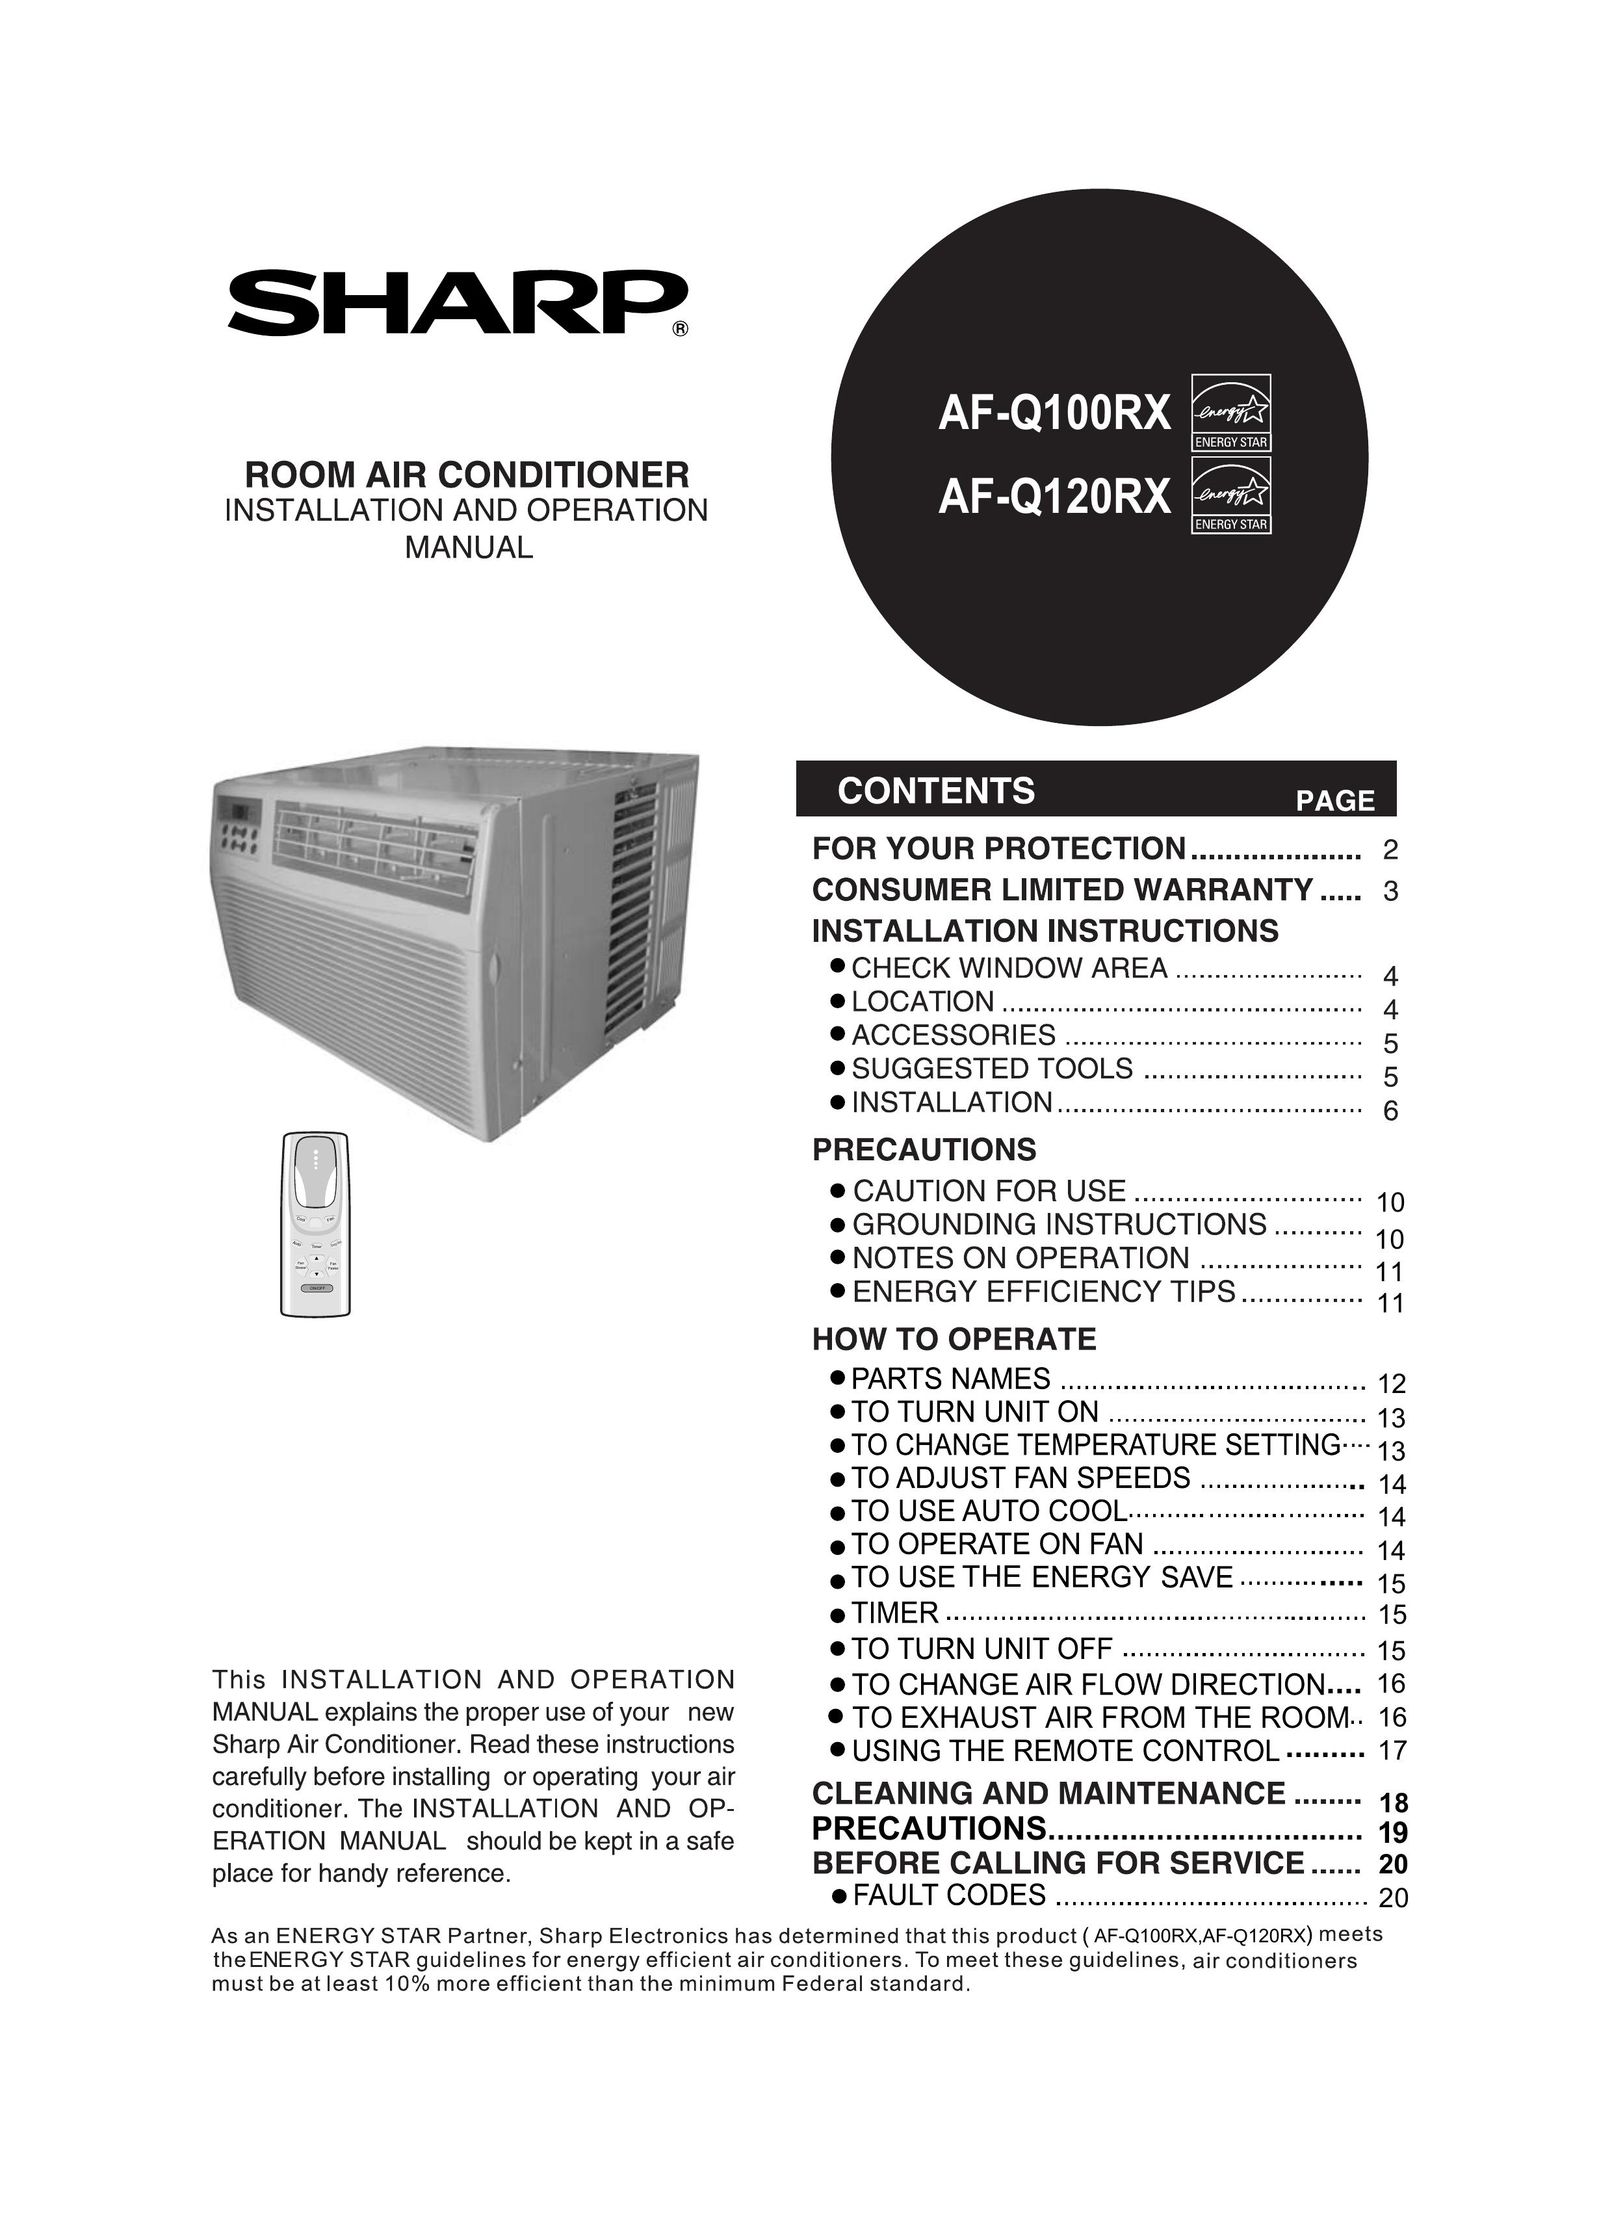 Sharp AF-Q120RX Air Conditioner User Manual